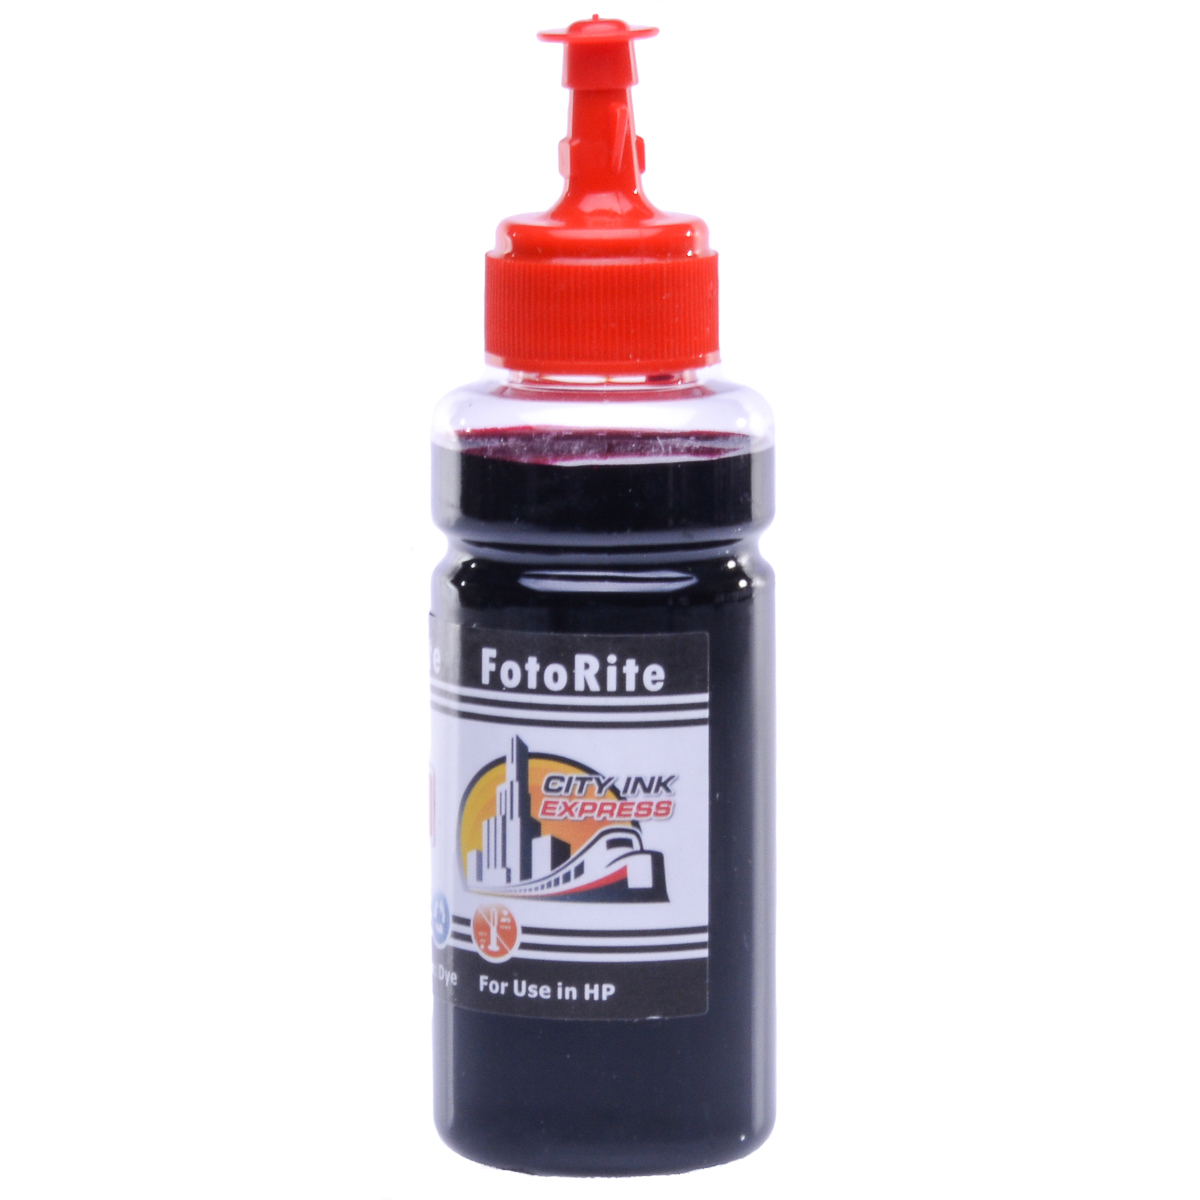 Cheap Magenta dye ink replaces HP Photosmart 7515 - HP 364